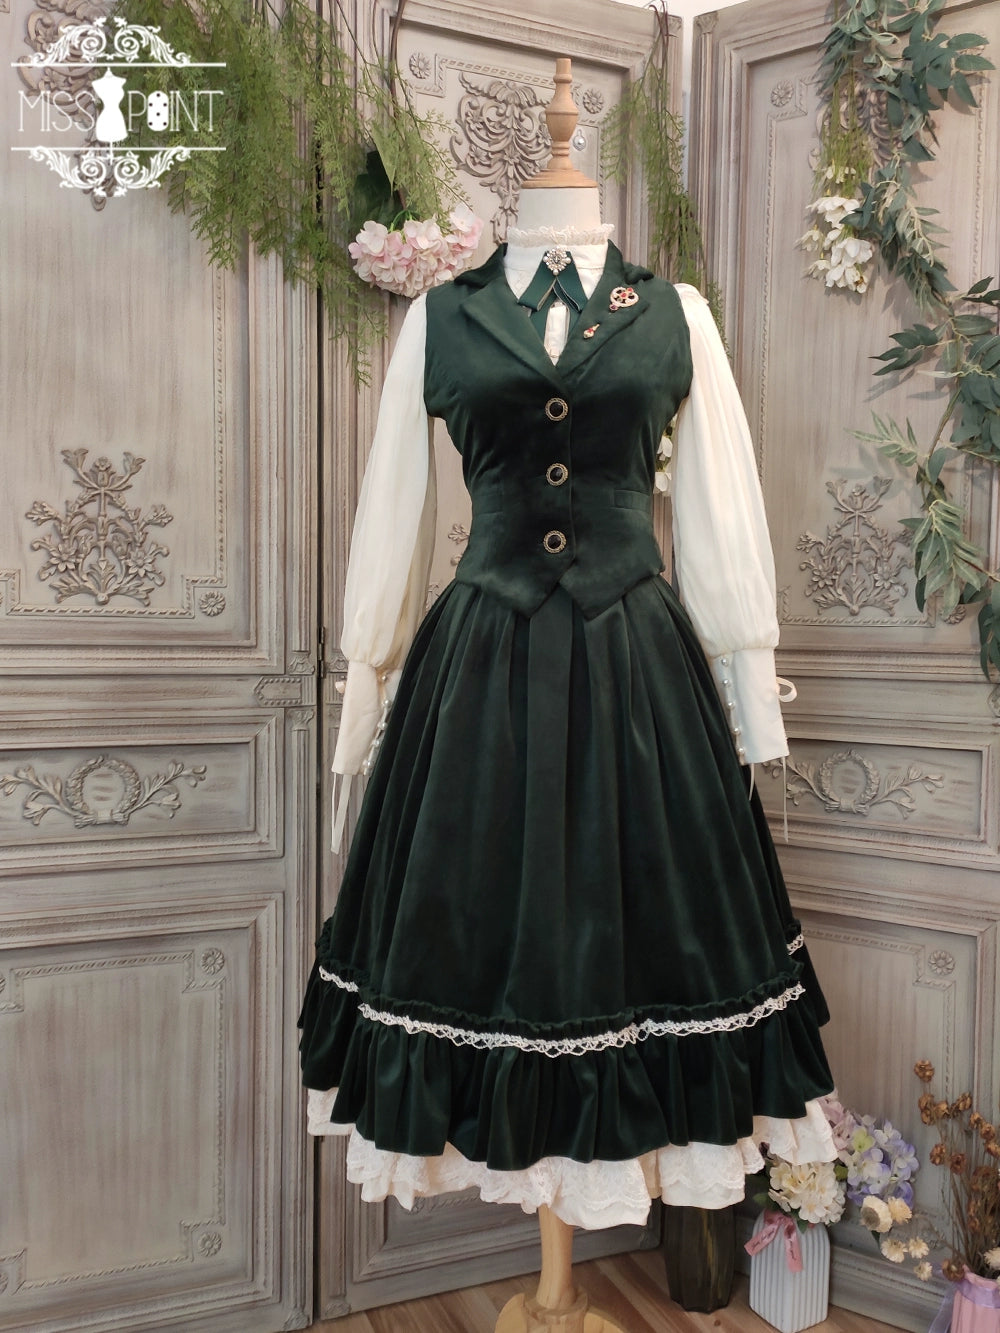 Miss Point~Rose Doll~Retro Lolita Vest Velvet Lolita Waistcoat XS dark green 